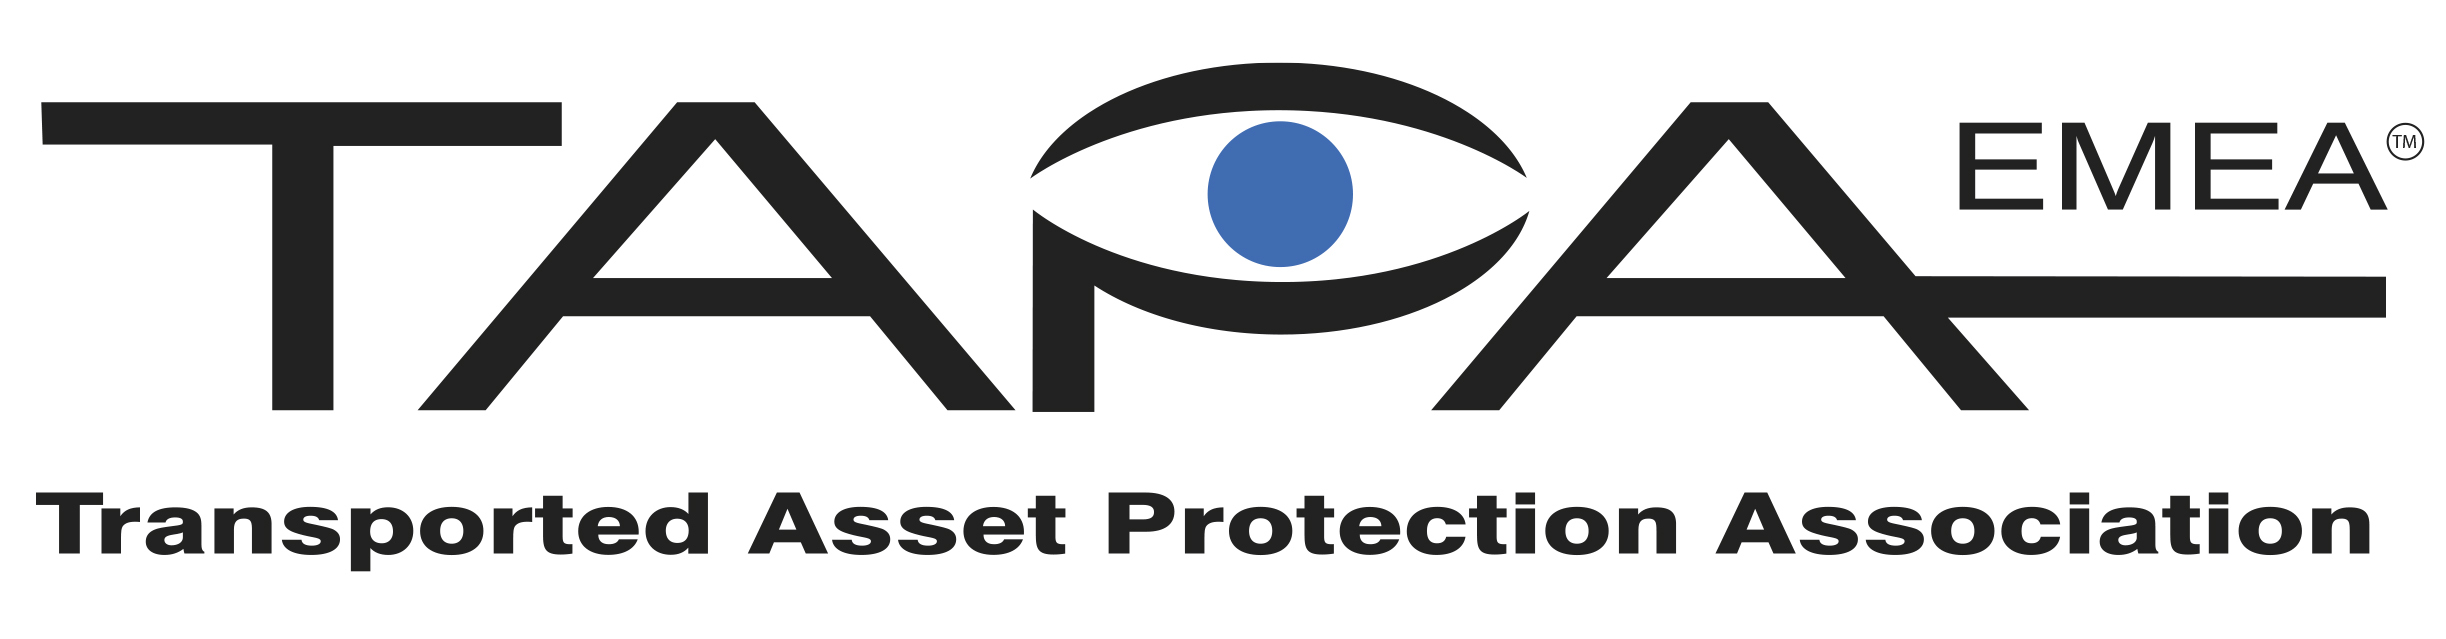 TAPA-EMEA - Transported Asset Protection AssociationTAPA-EMEA - Transported Asset Protection Association